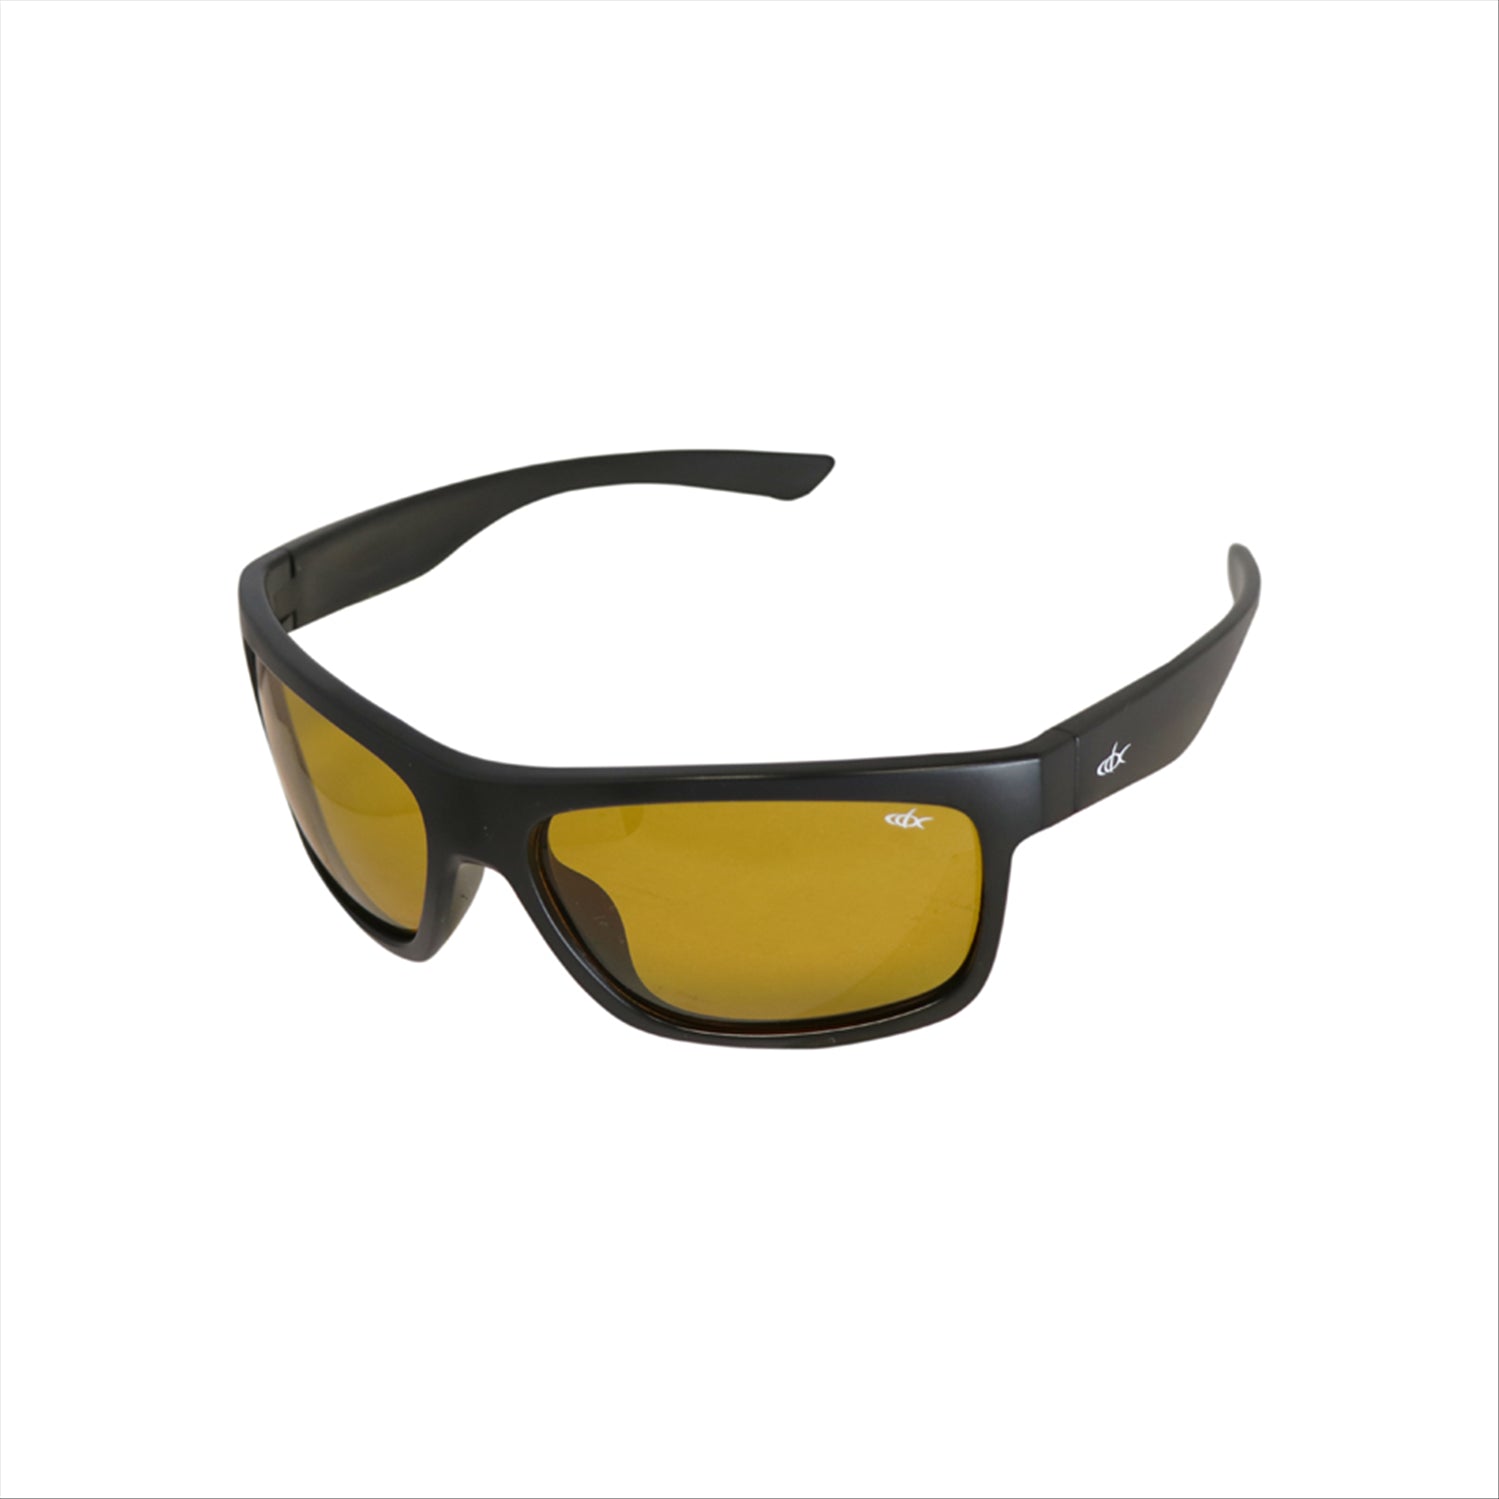 Cdx Slick Fish Polarized Scratch Resistant Sunglasses